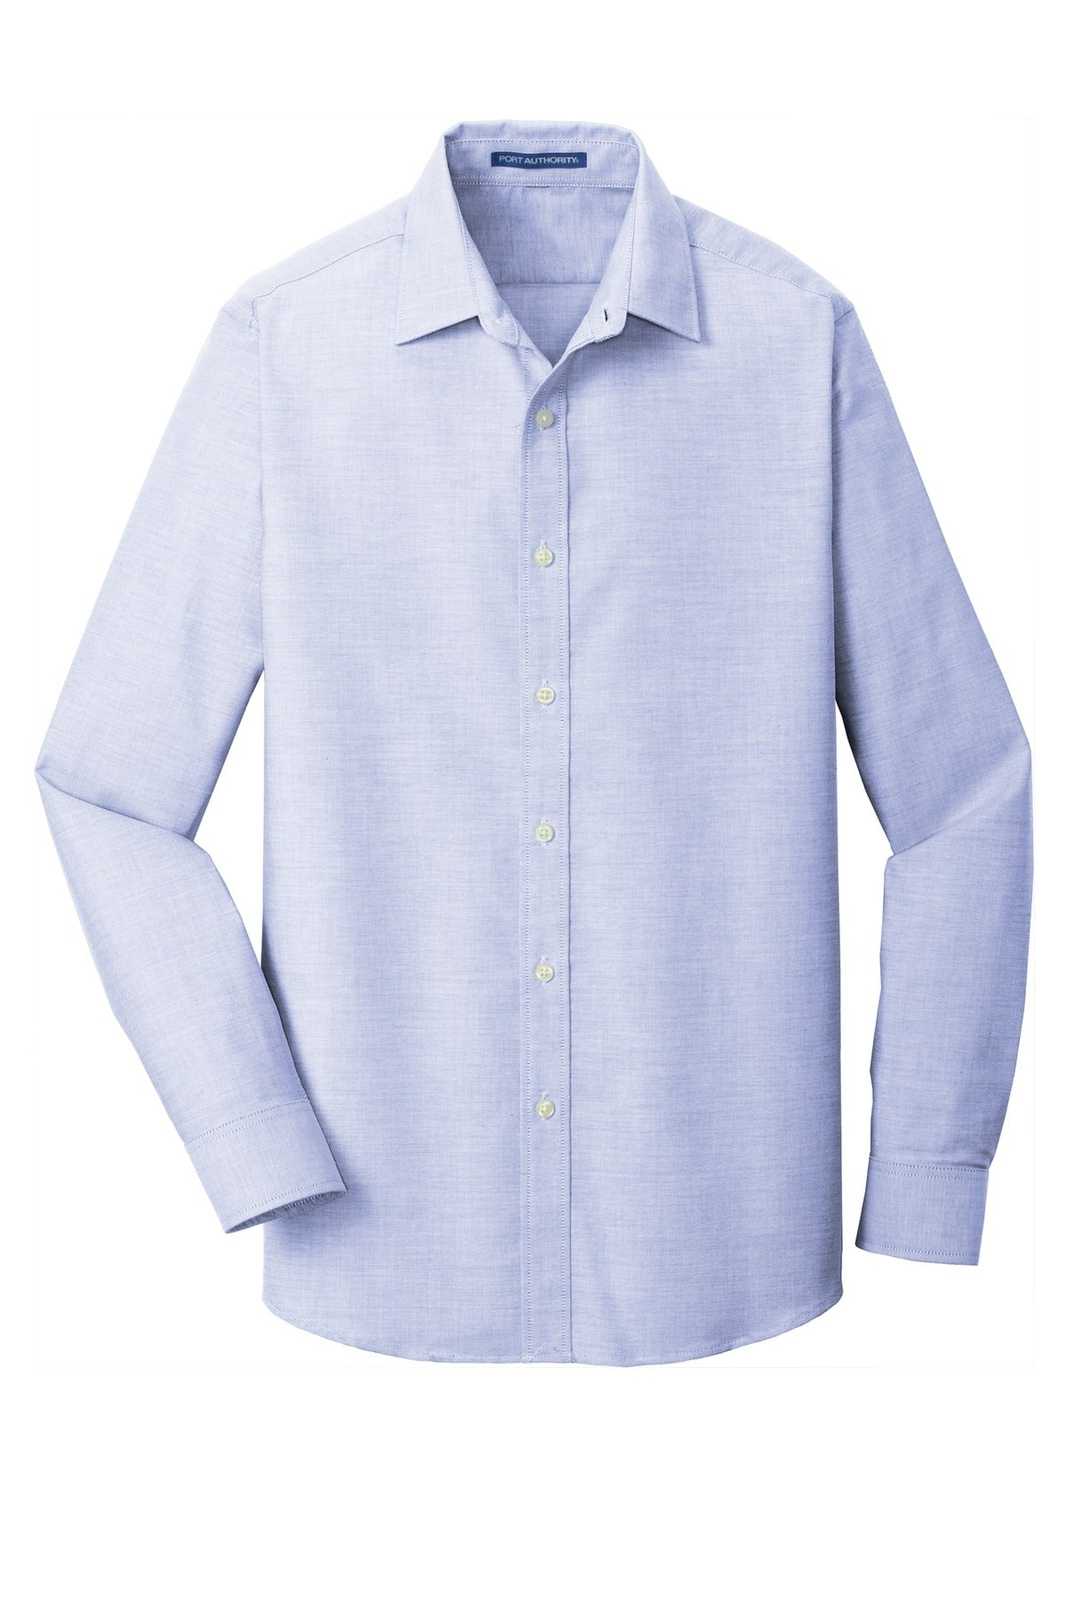 Port Authority S661 Slim Fit Superpro Oxford Shirt - Oxford Blue - HIT a Double - 5